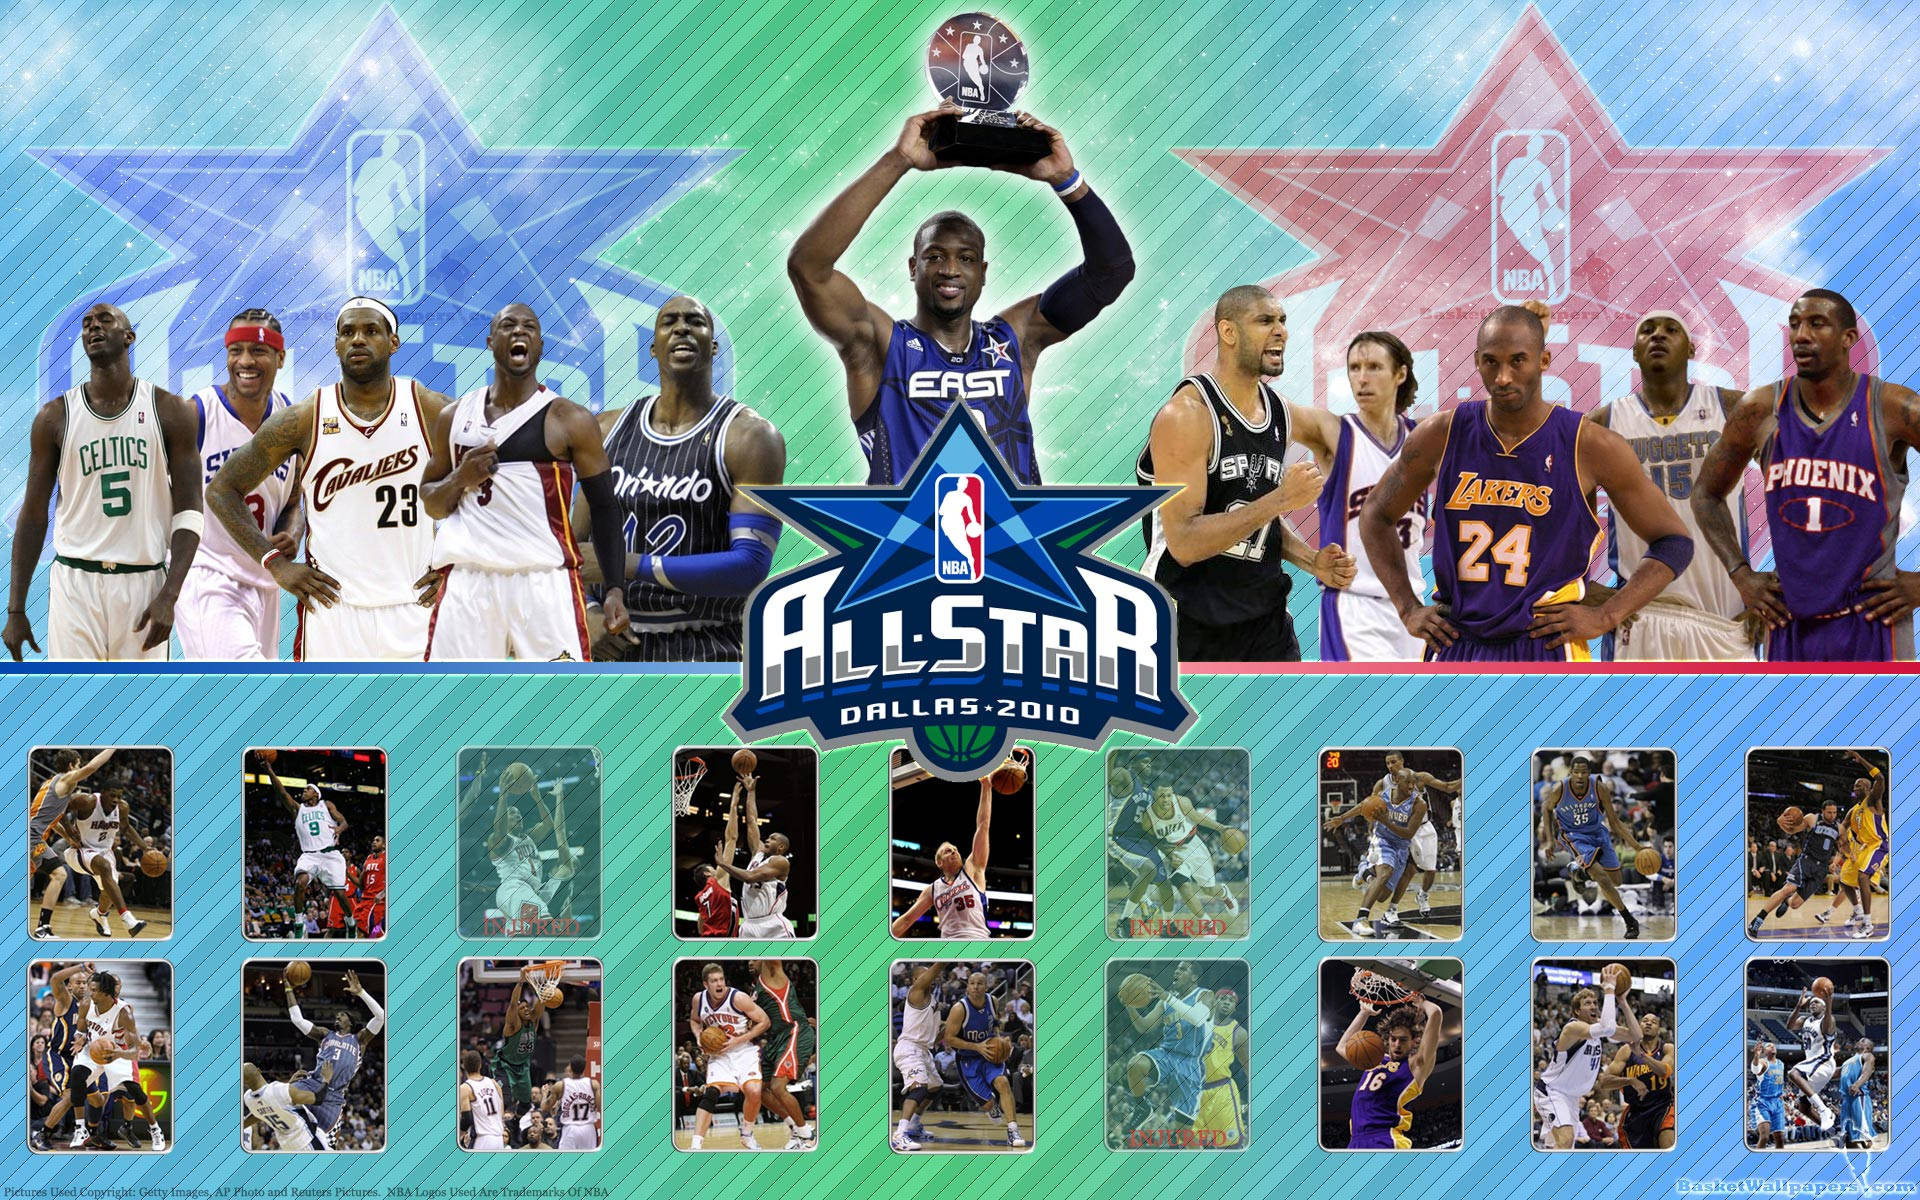 All-star Dallas Basketball Team Background